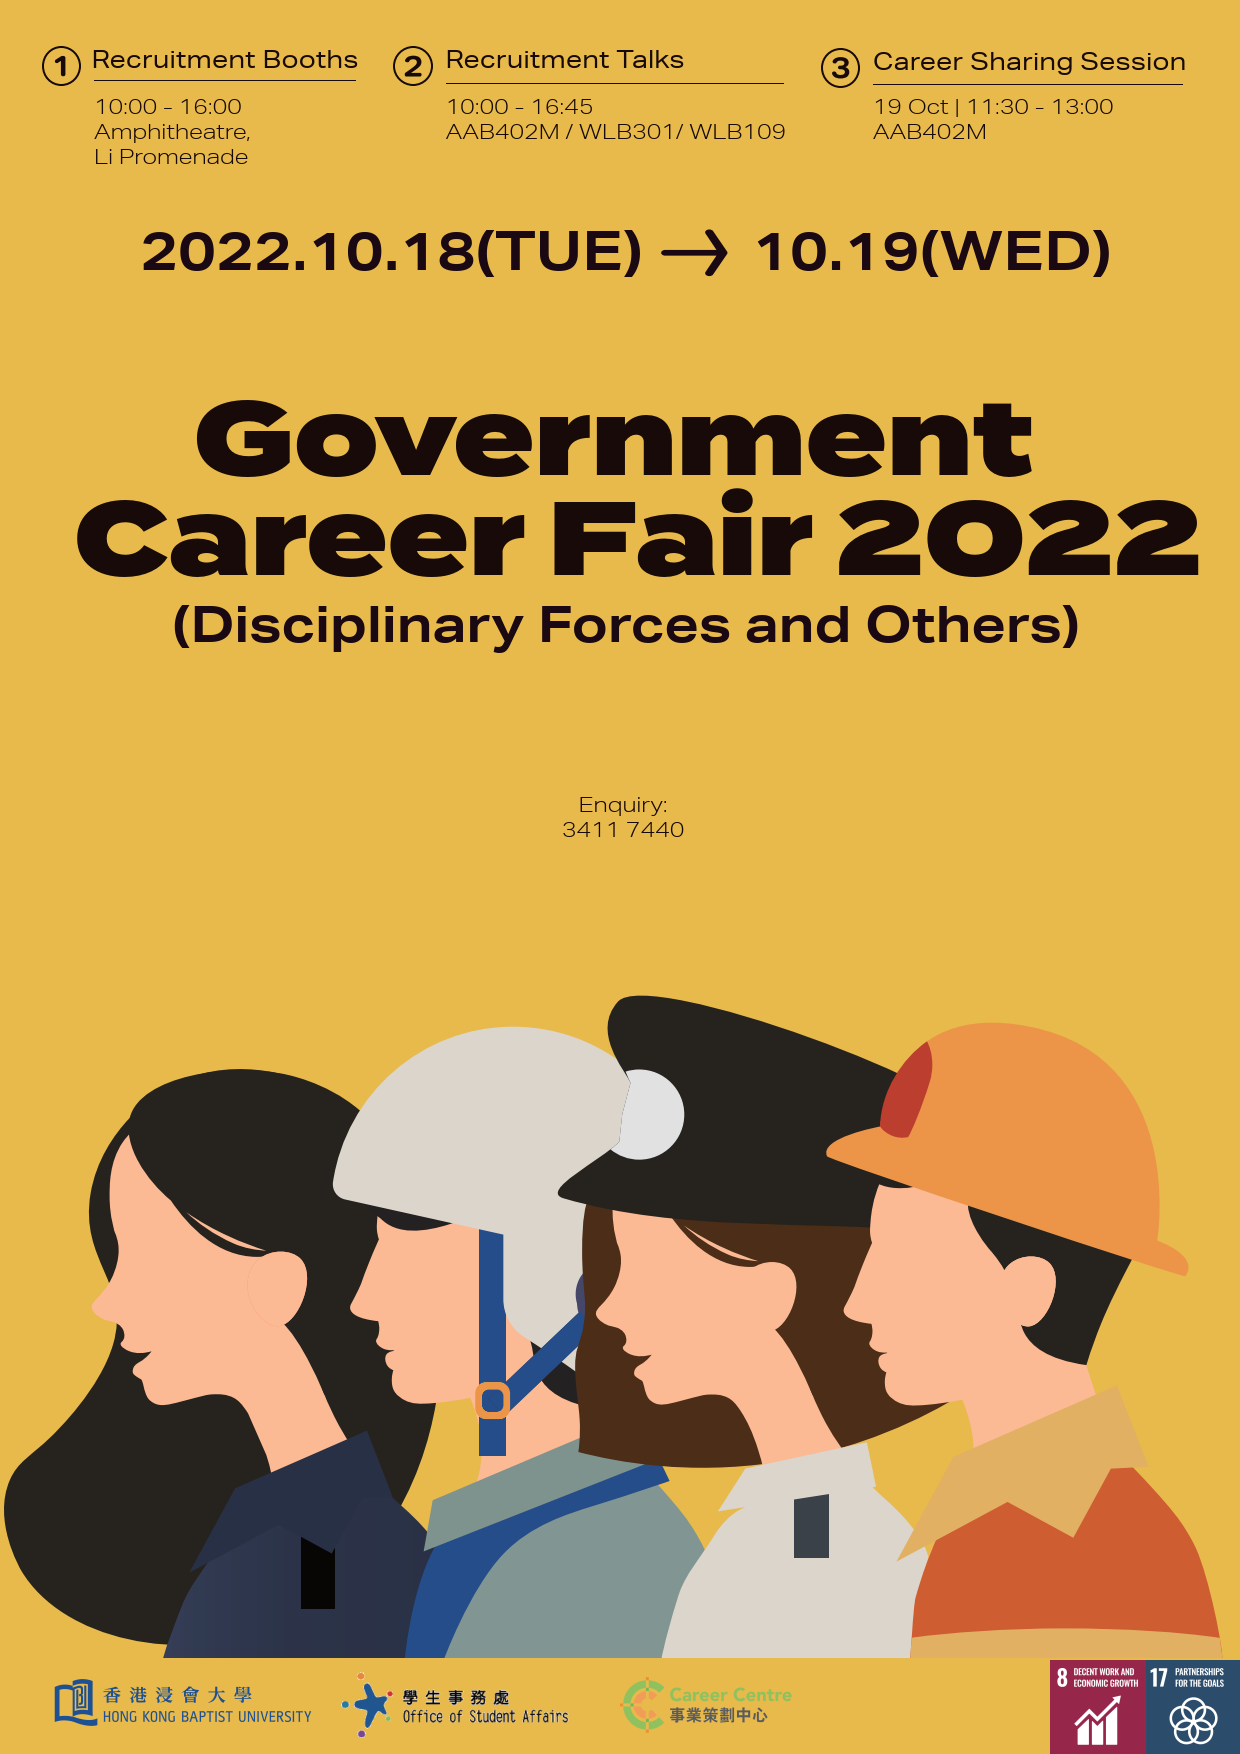 Career Fair 2022 18-19 Oct 2022 Poster